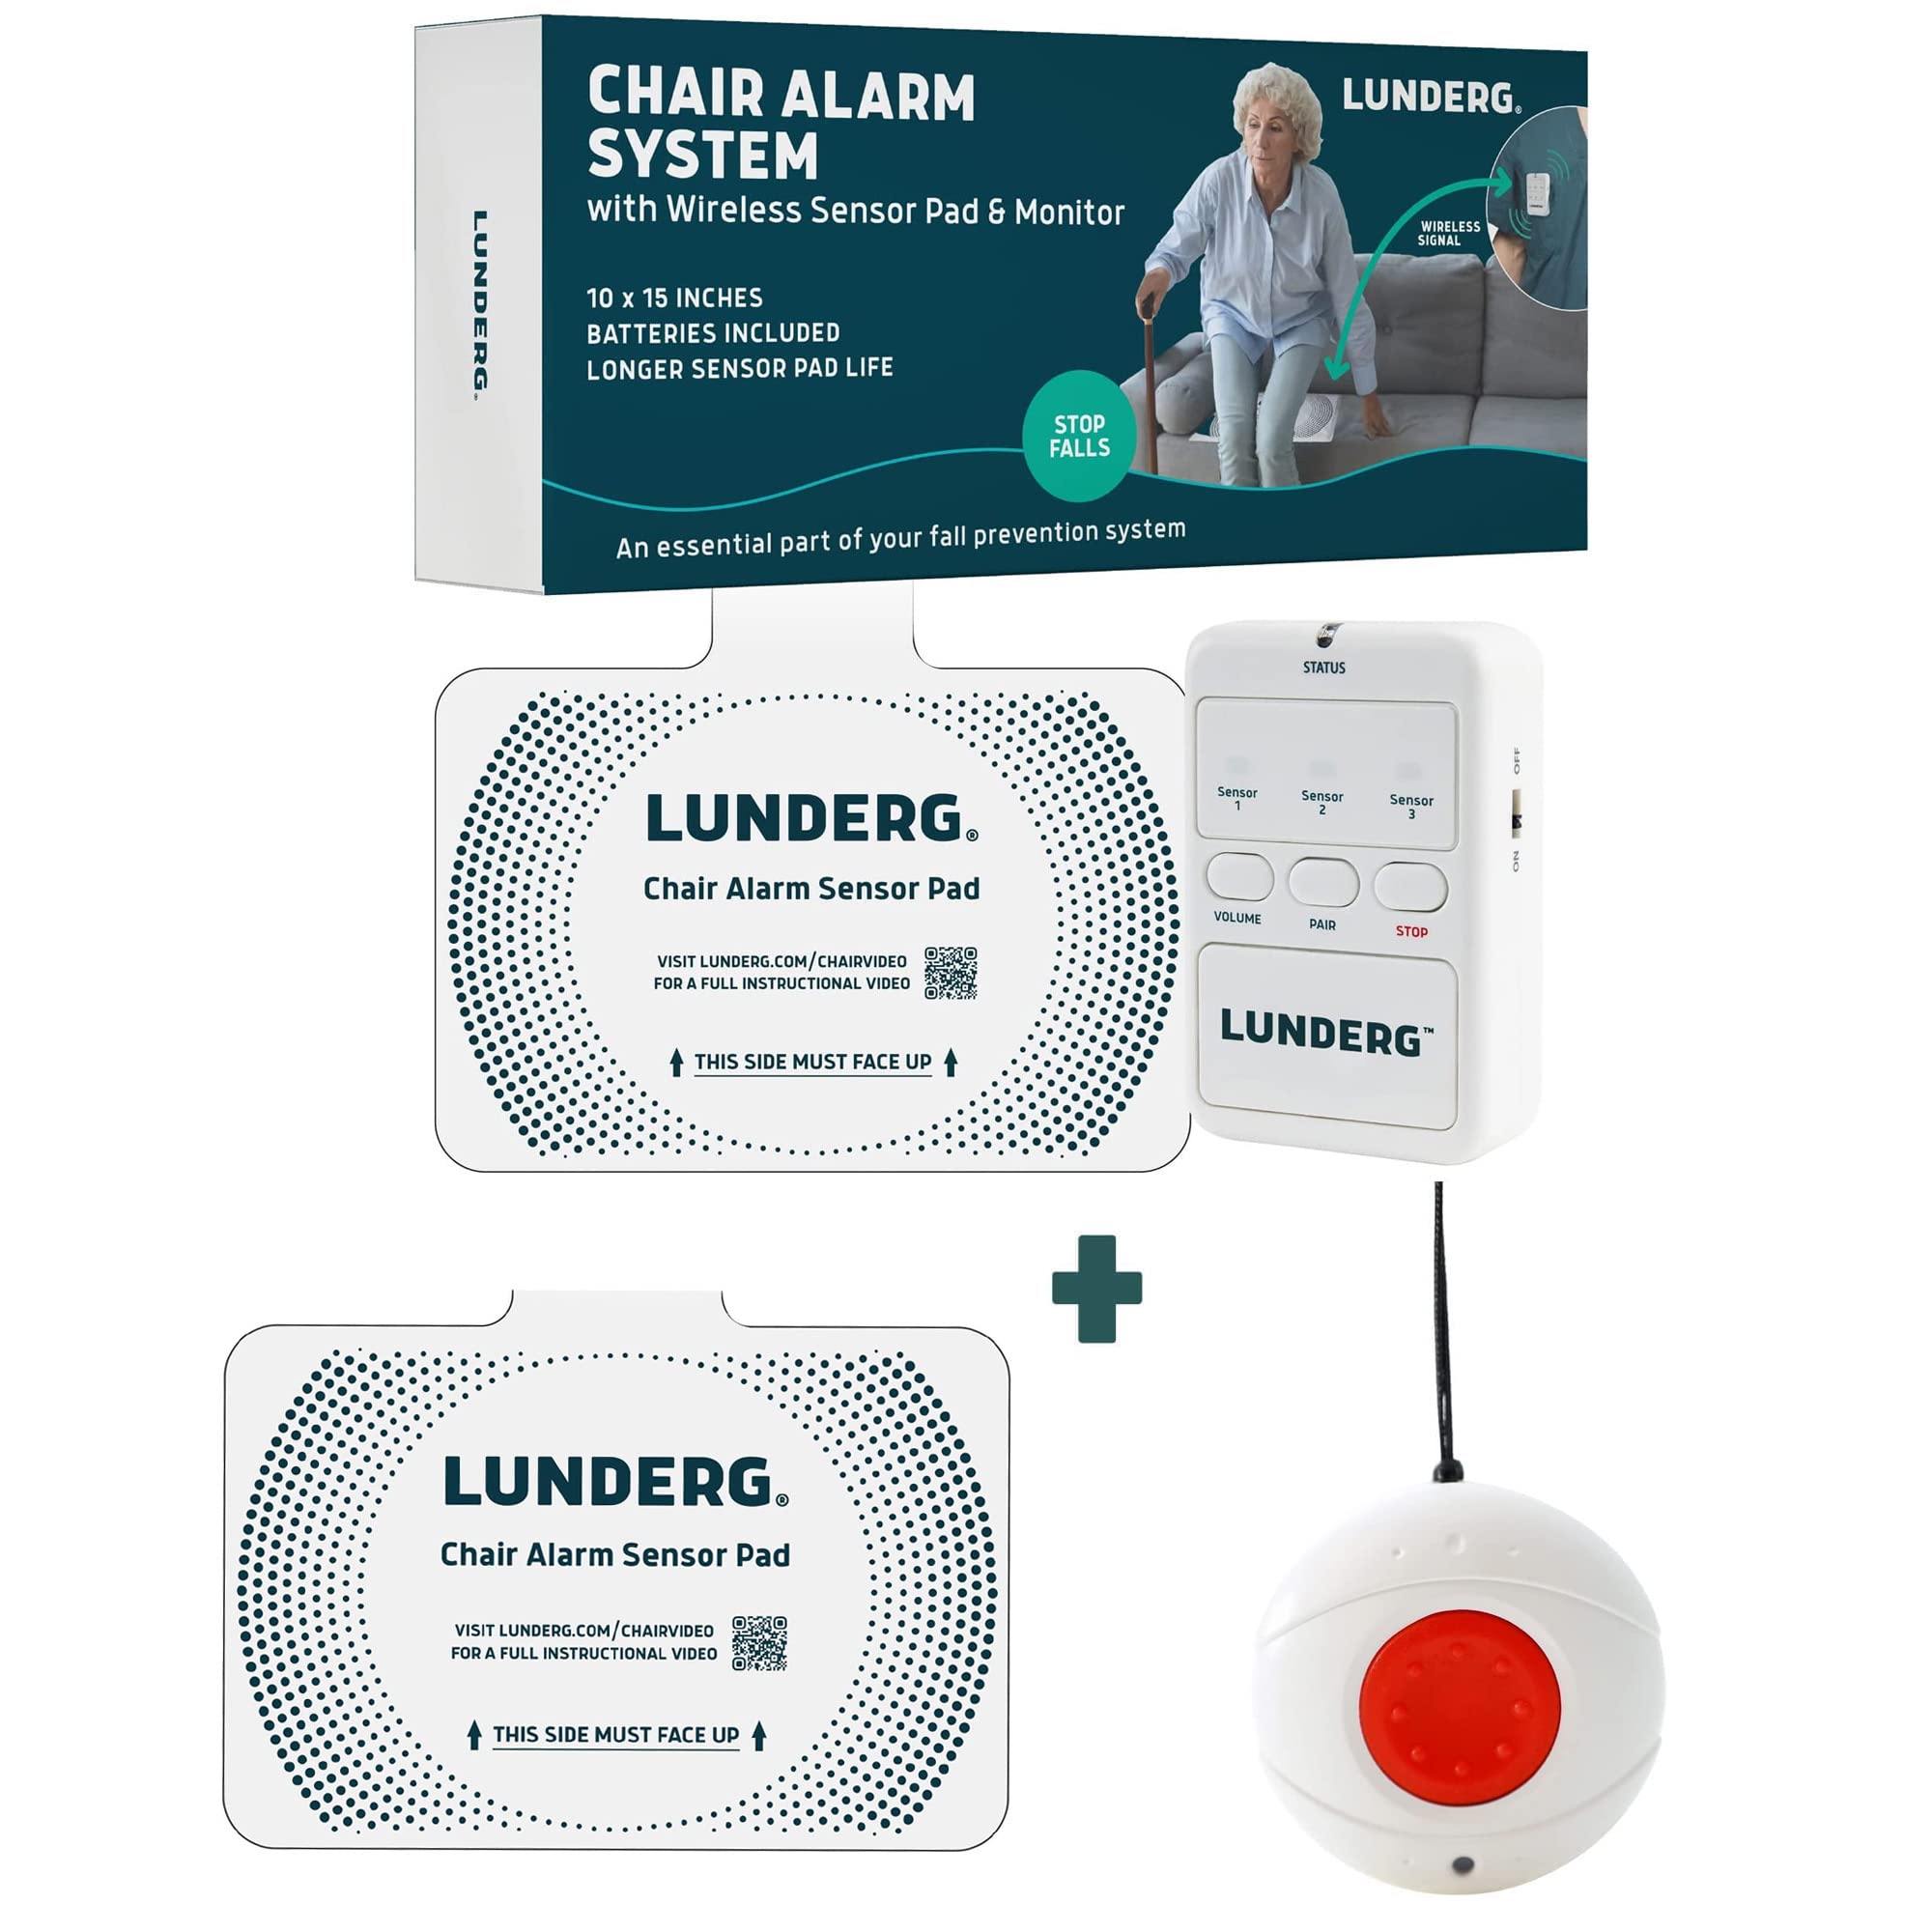 Lunderg Chair Alarm System